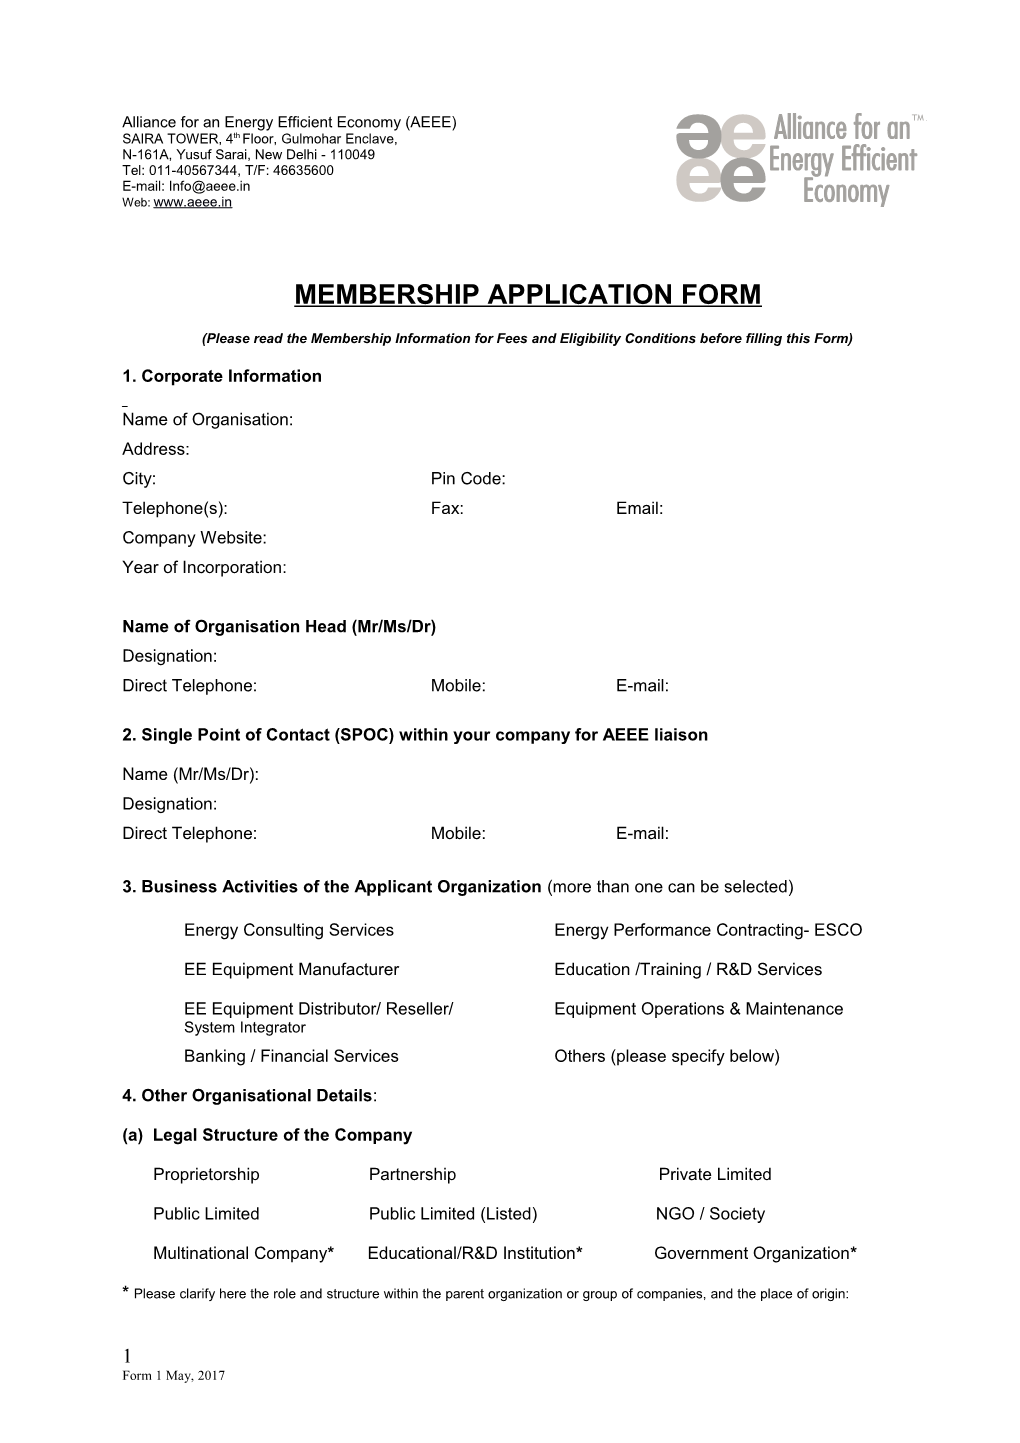 Membership Application Form s21